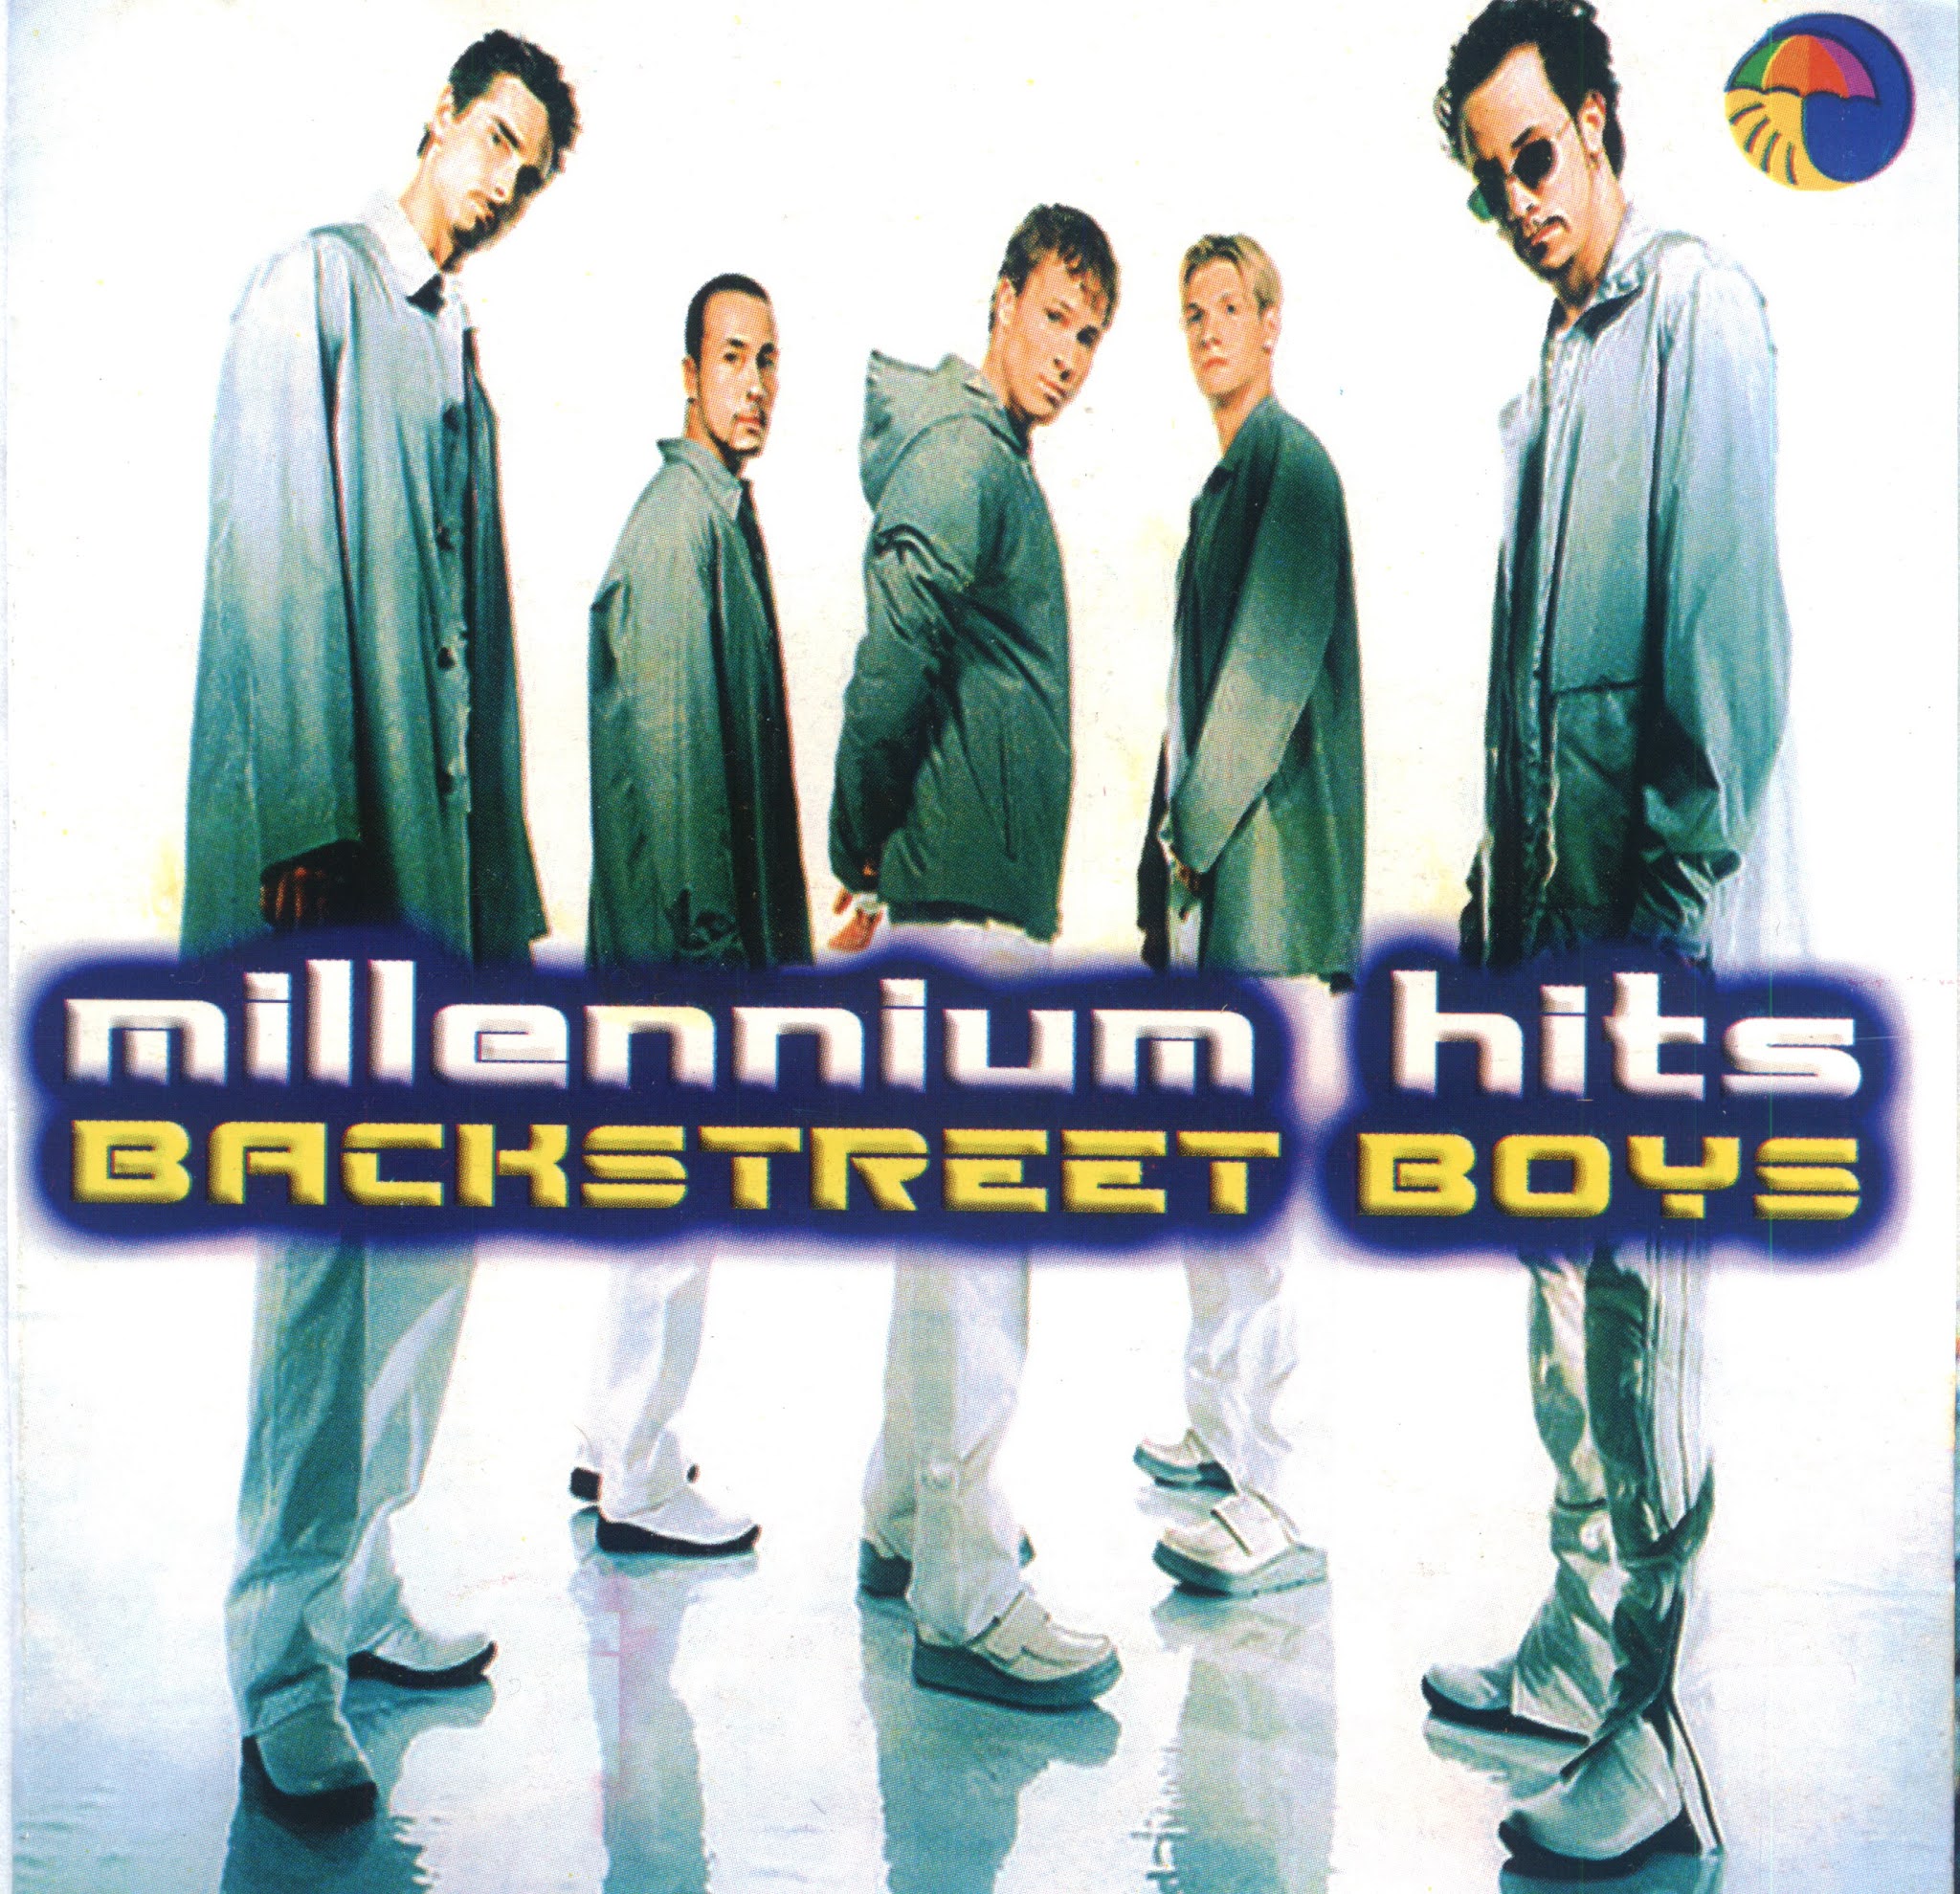 Backstreet boys mp3. Миллениум 1999 Backstreet boys. Backstreet boys Millennium альбом. Backstreet boys обложка. Millennium Backstreet boys обложка.